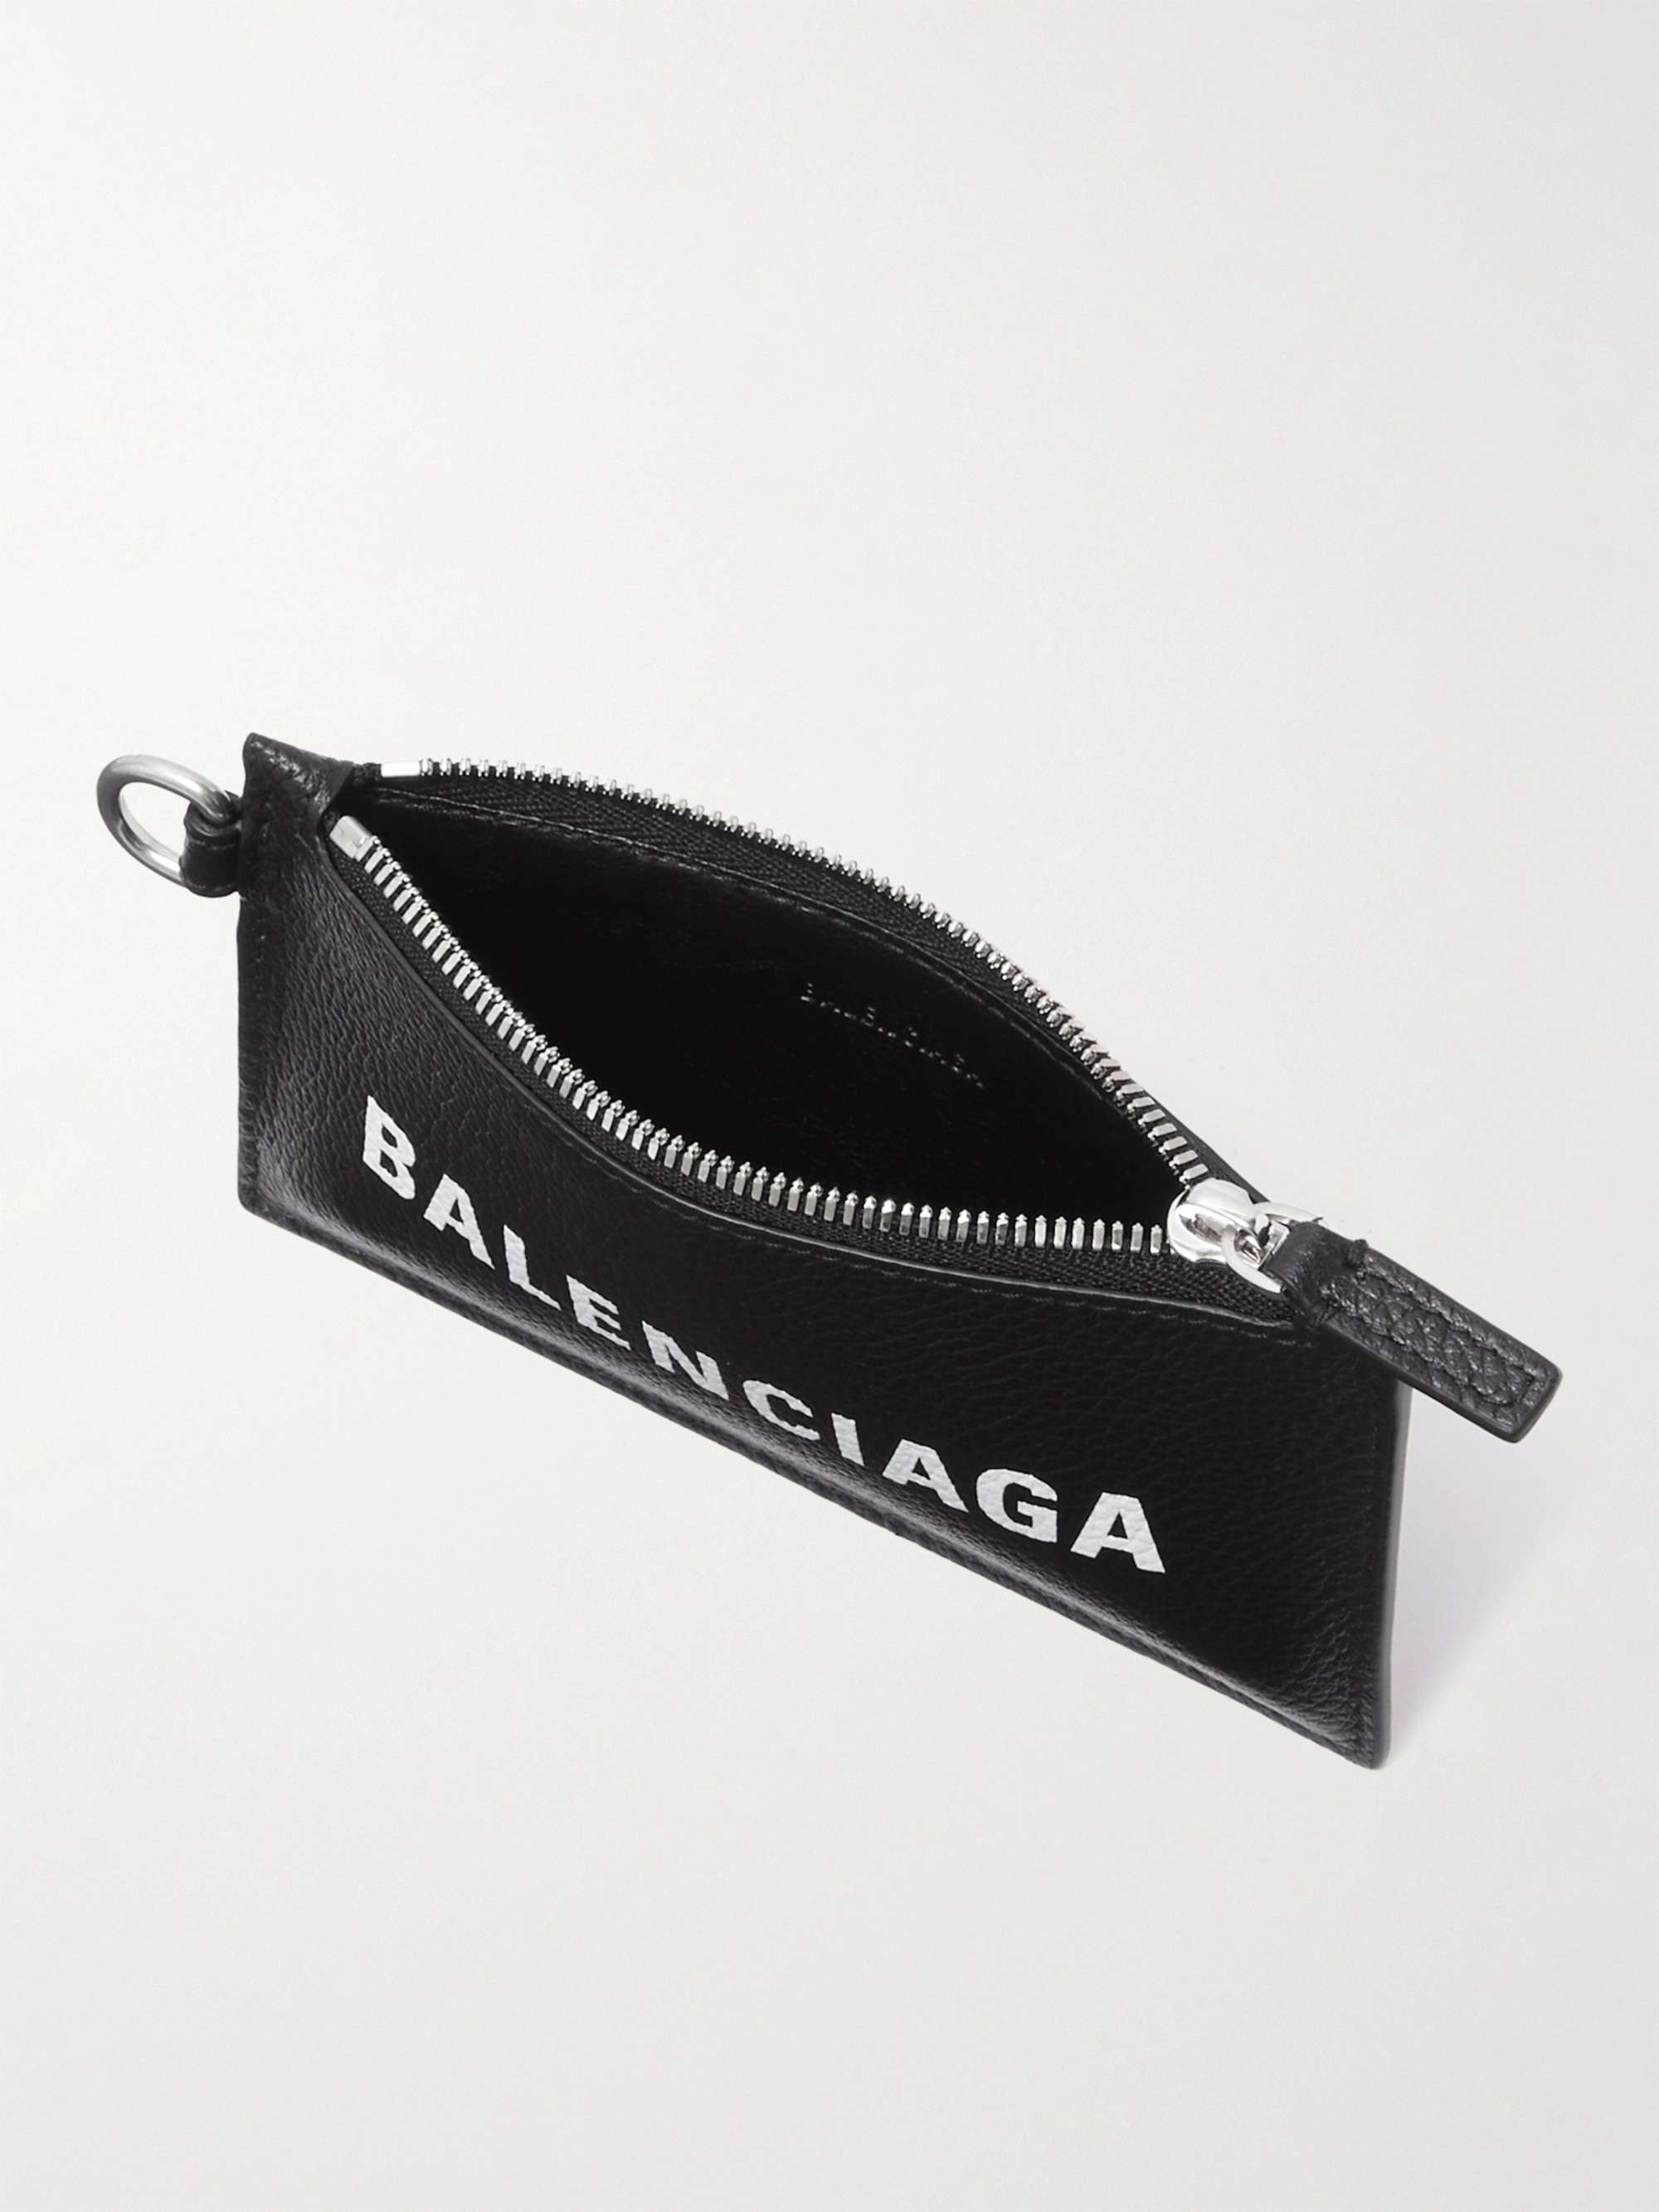 Balenciaga All Over Brand Print Black Leather Lanyard Card Holder Wallet